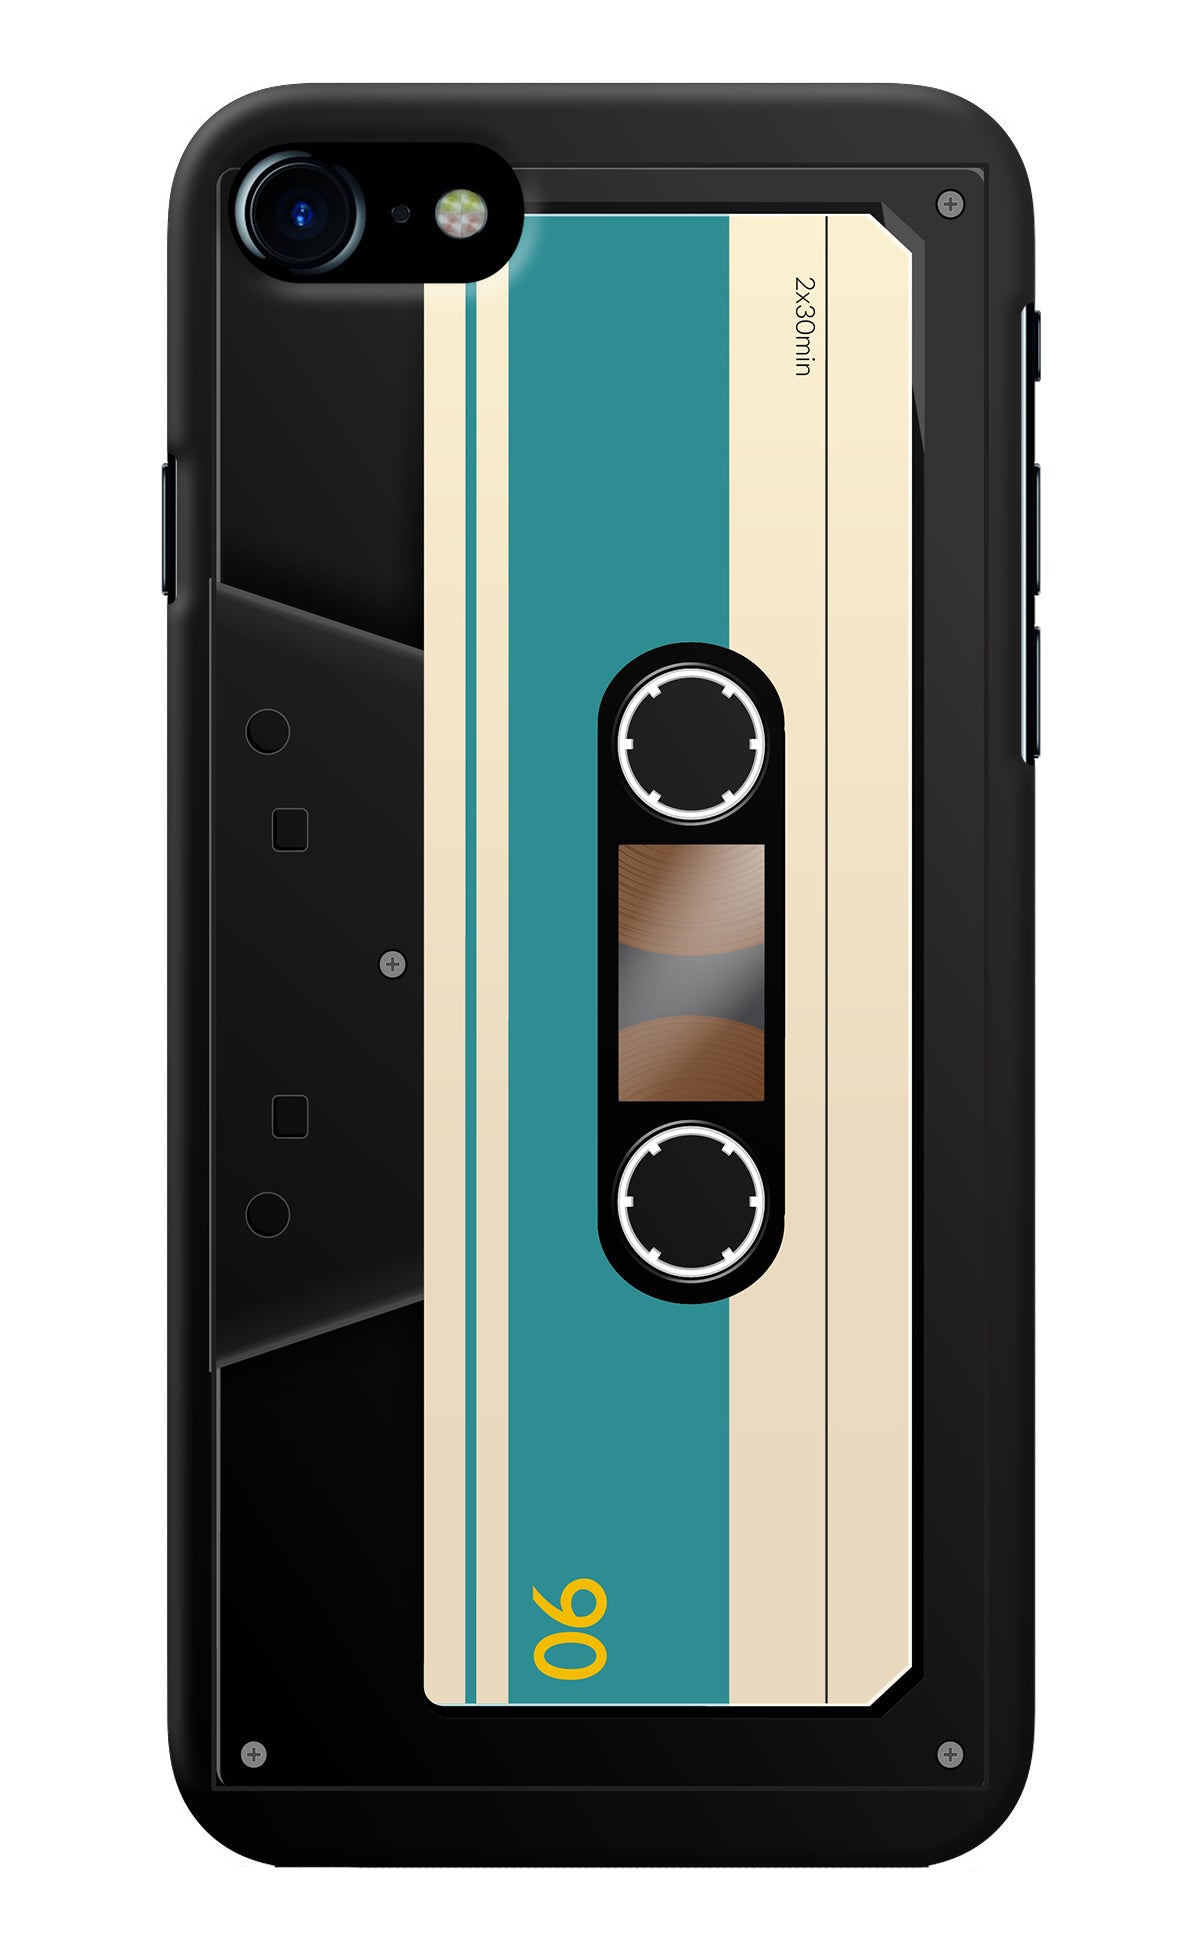 Cassette iPhone 8/SE 2020 Back Cover